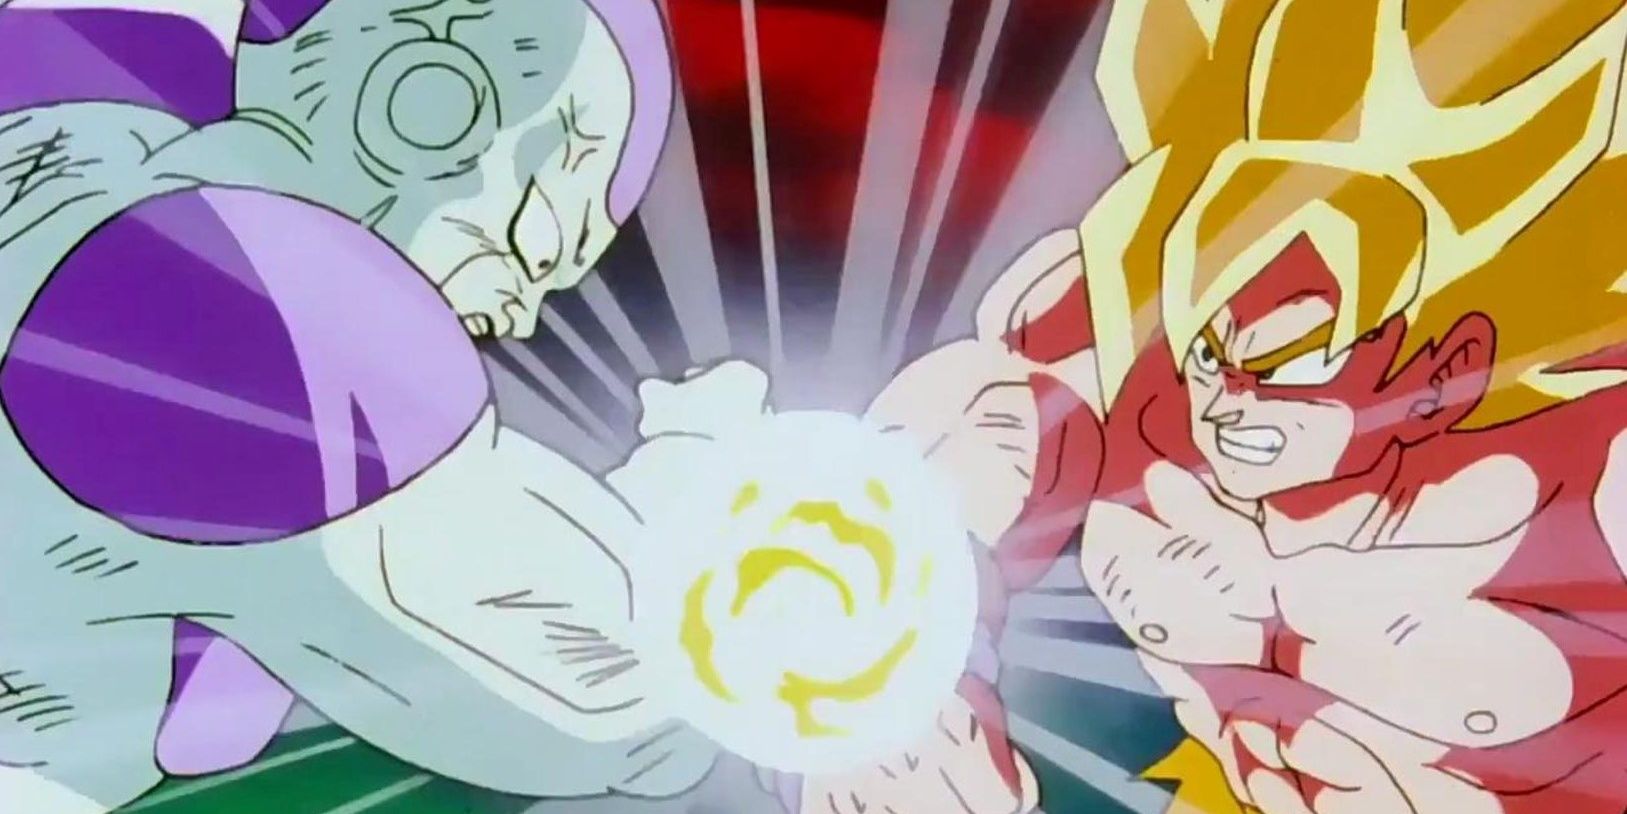 Goku versus Frieza from Dragon Ball Z